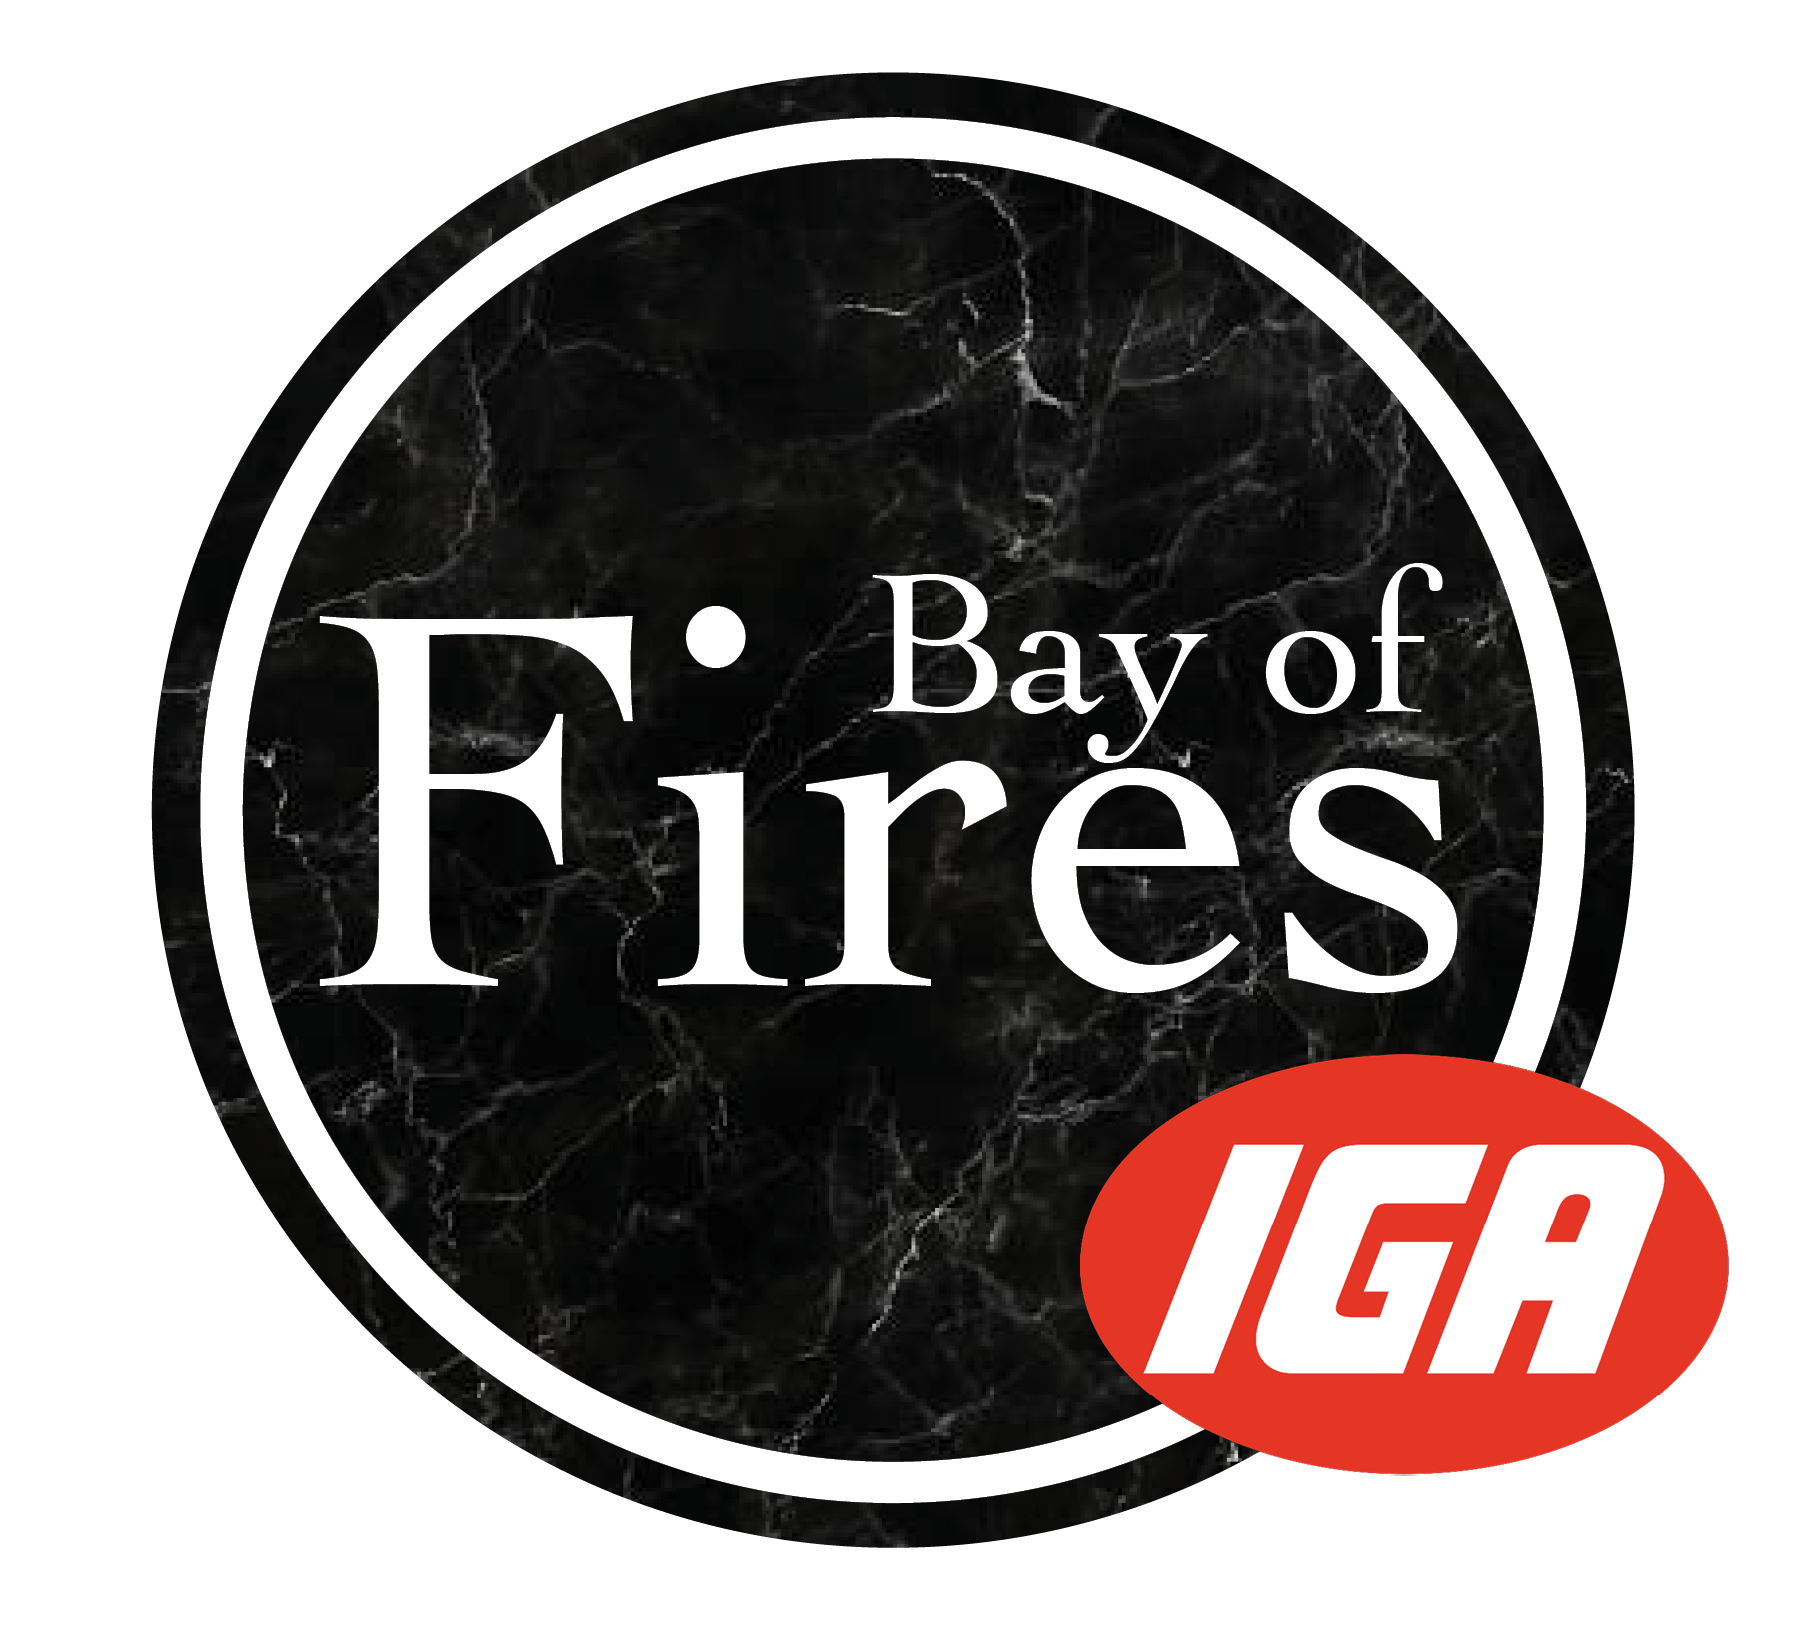 Shop online at  Bay of Fires IGA in St Helens, Tasmania